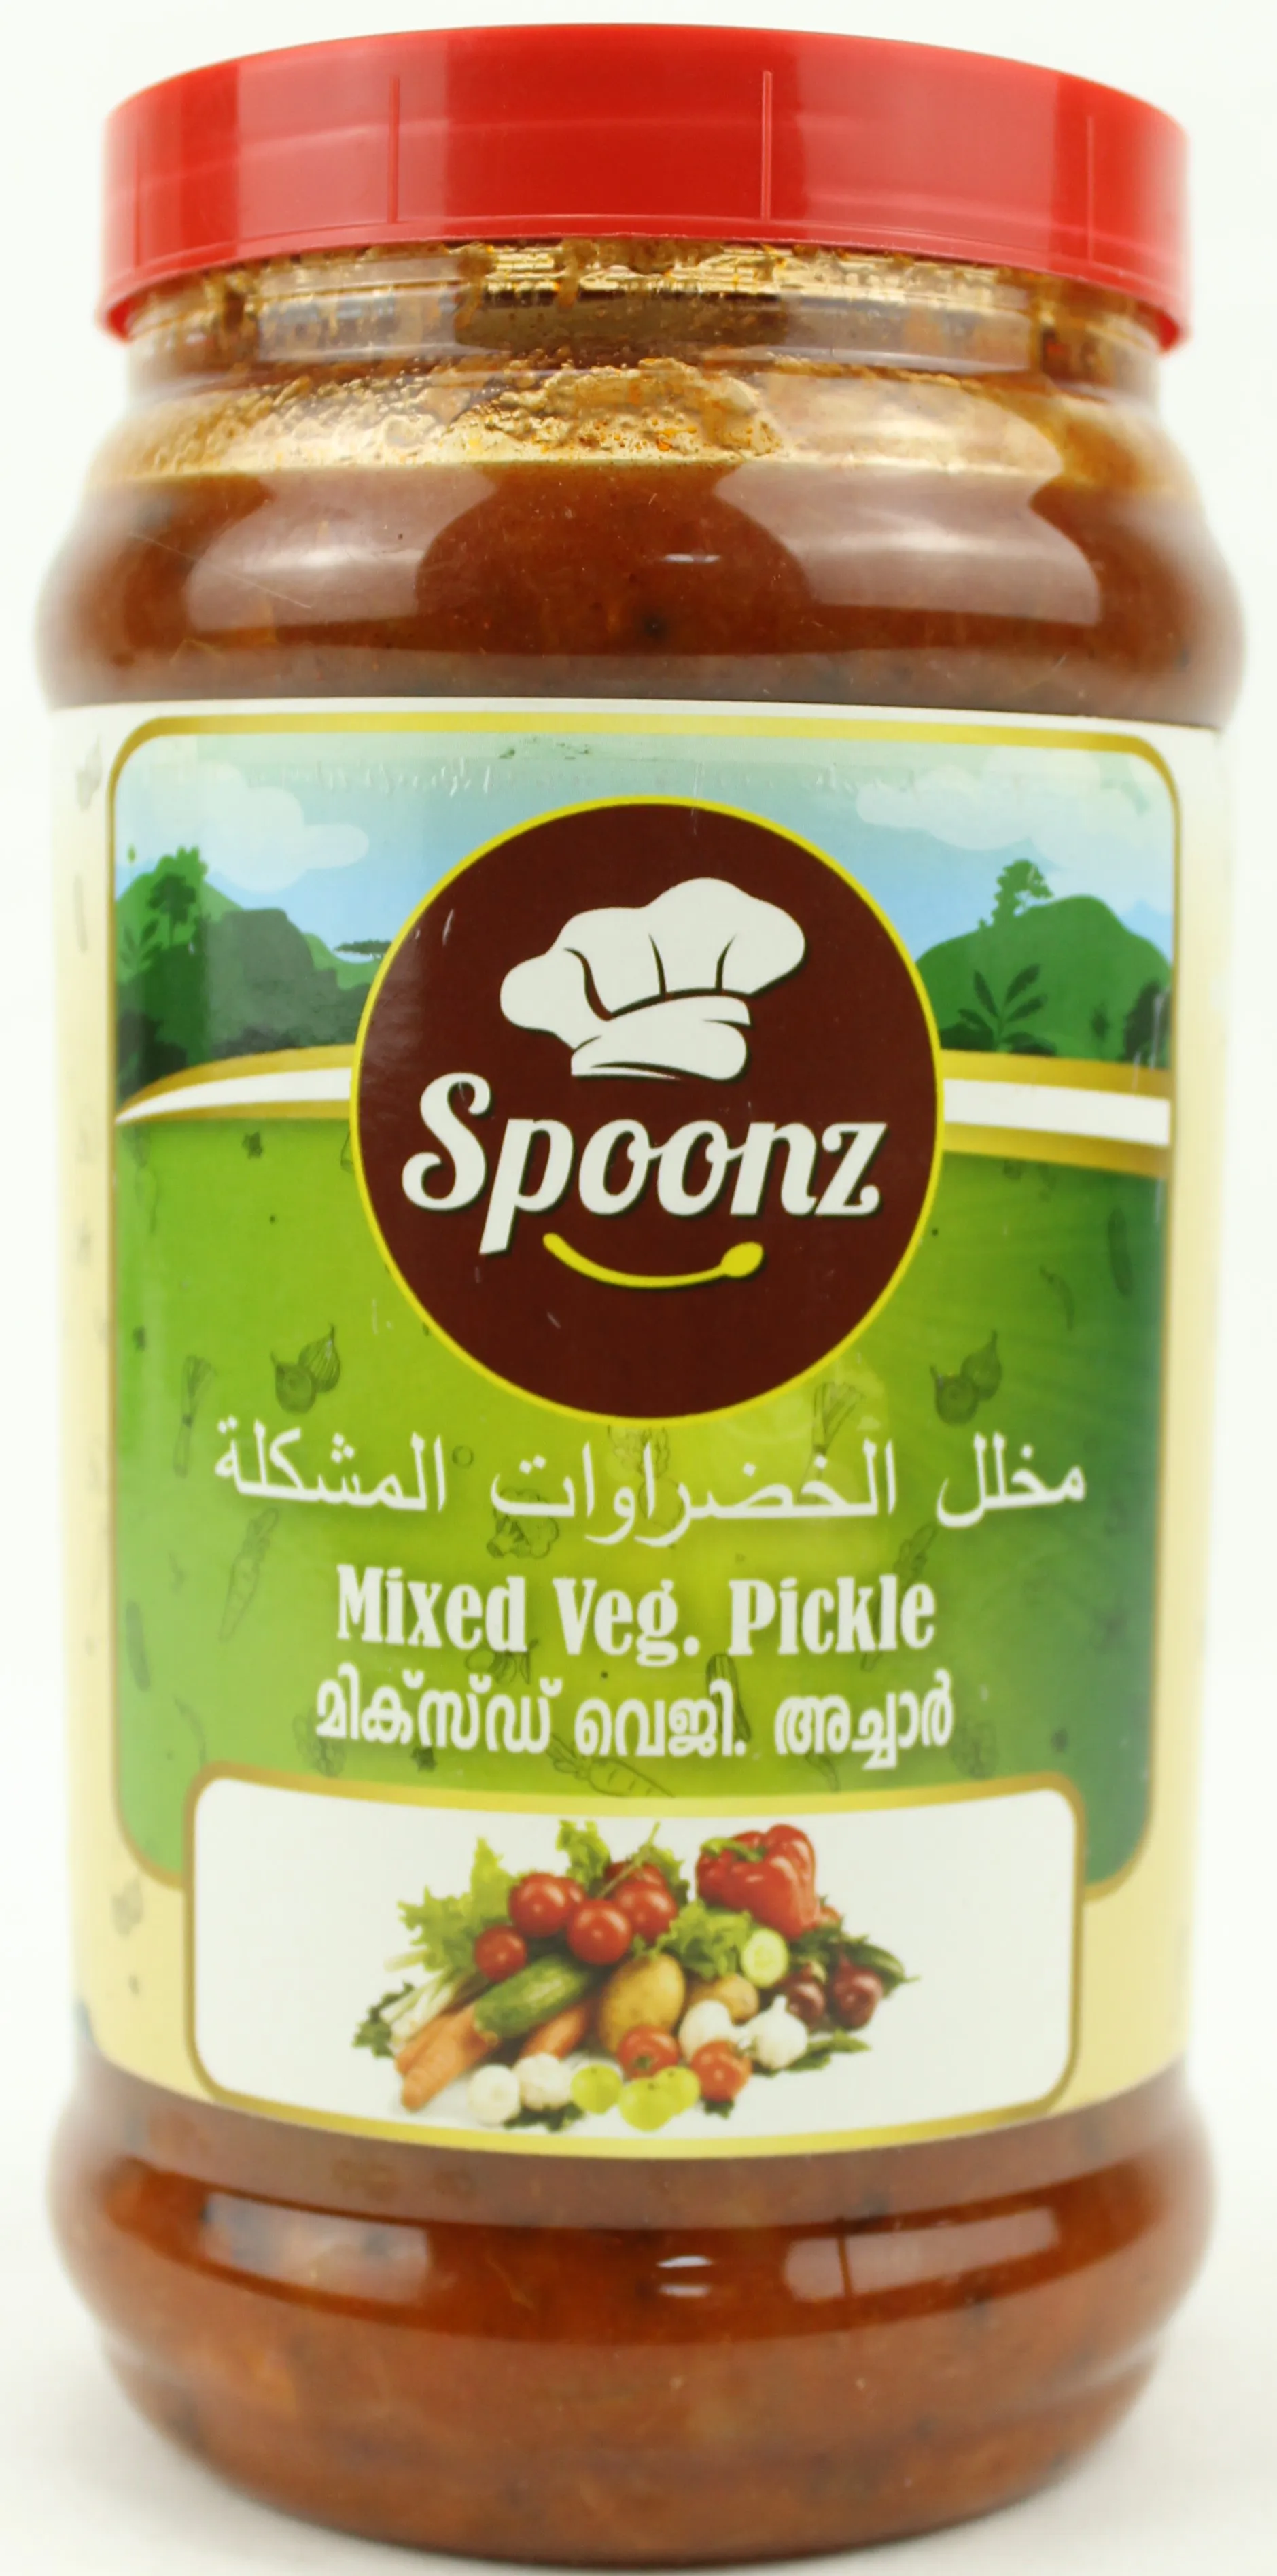 Spoonz Mixed Vegetable Pickle, 1Kg